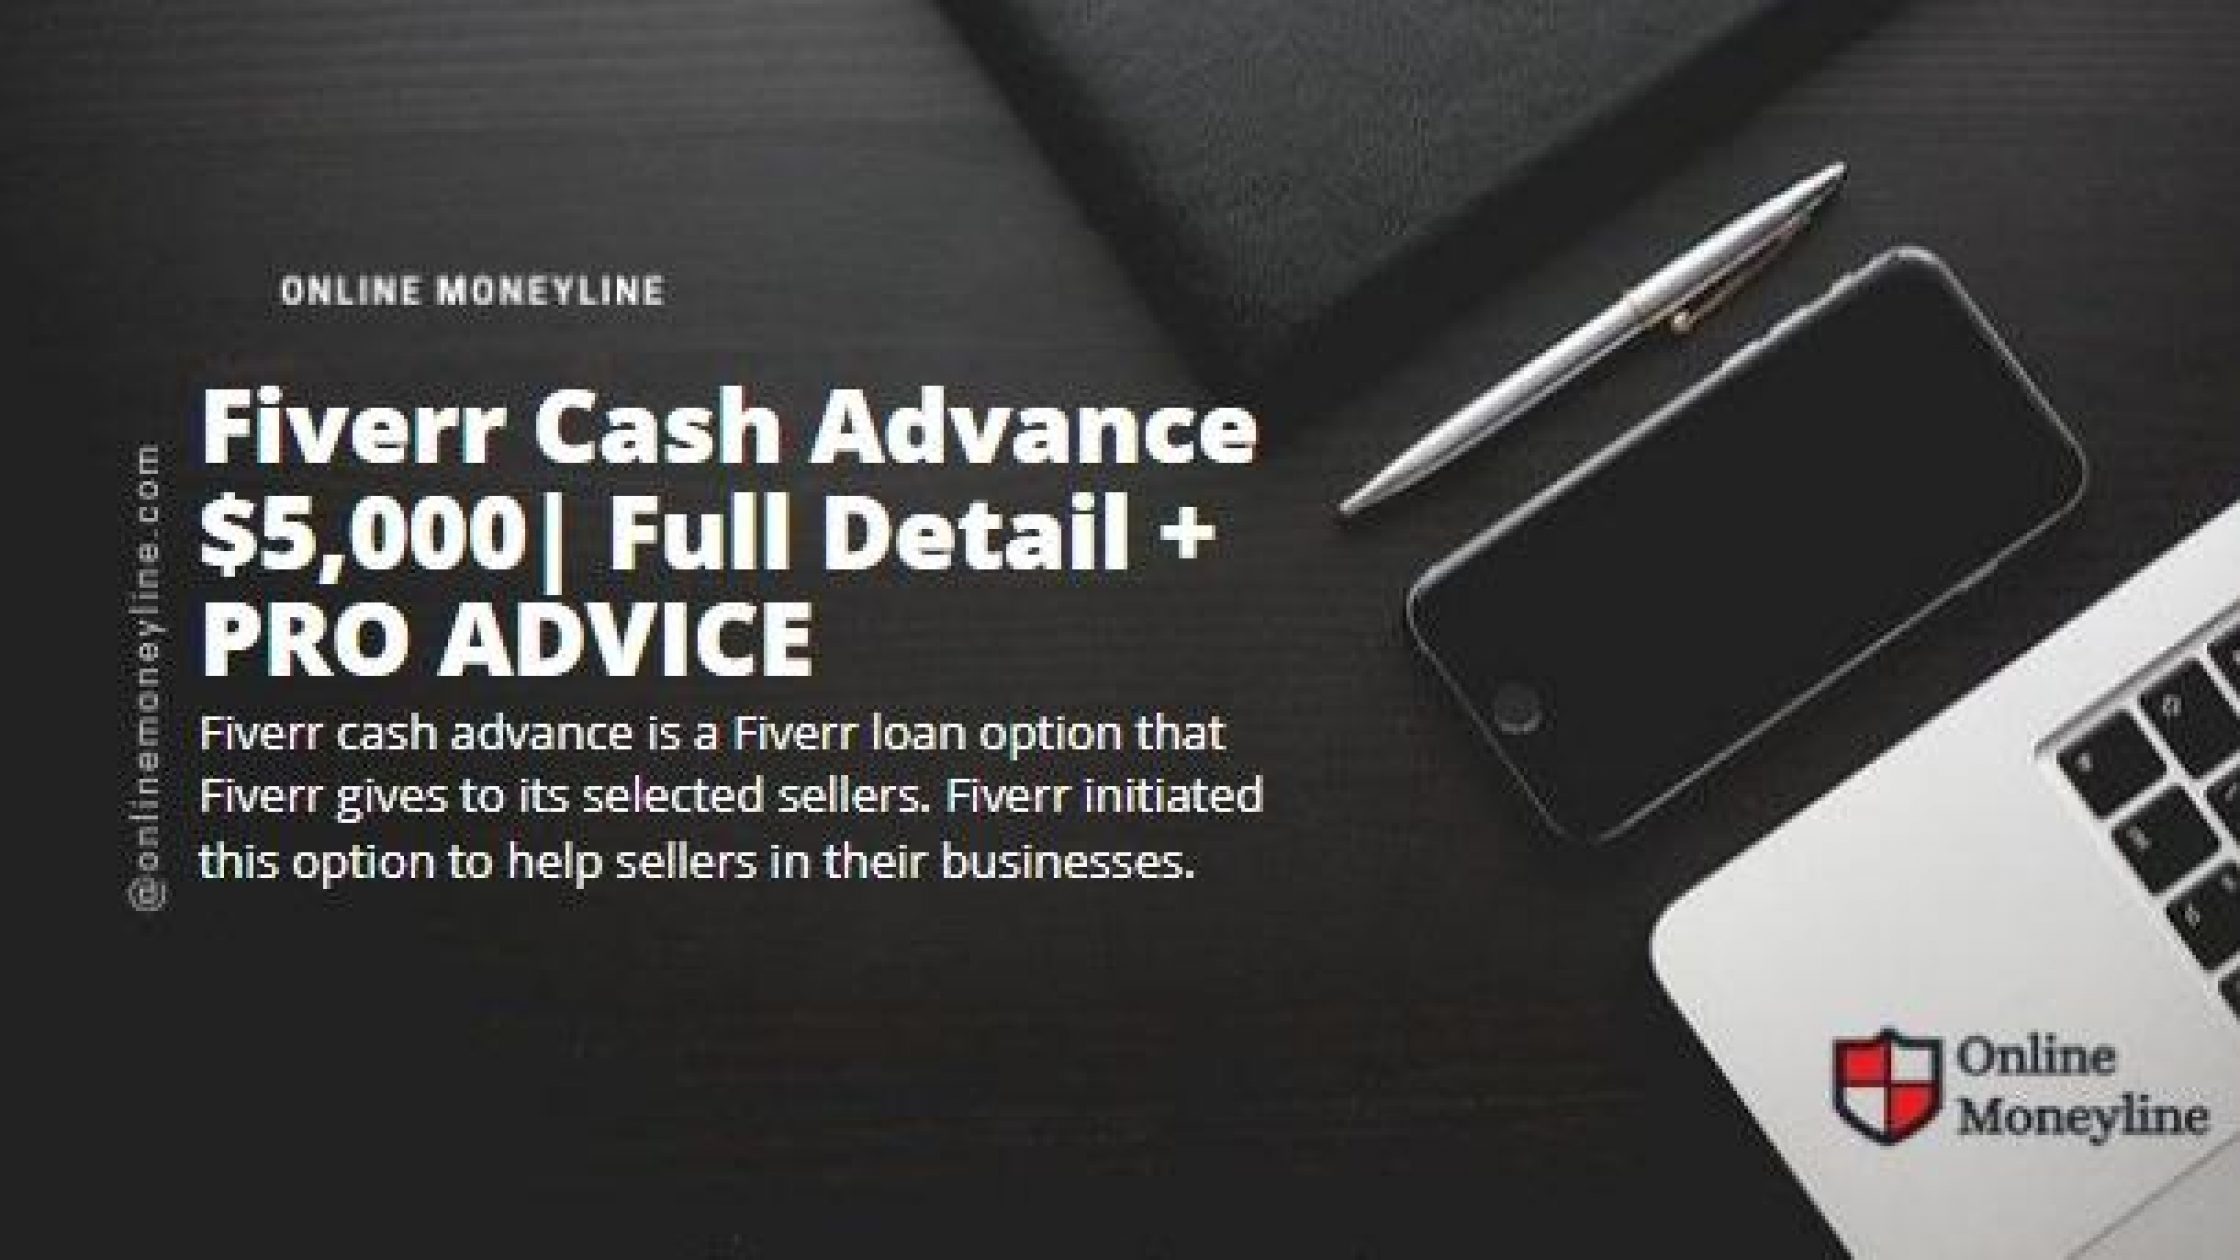 Fiverr Cash Advance $5,000| Full Detail + PRO ADVICE